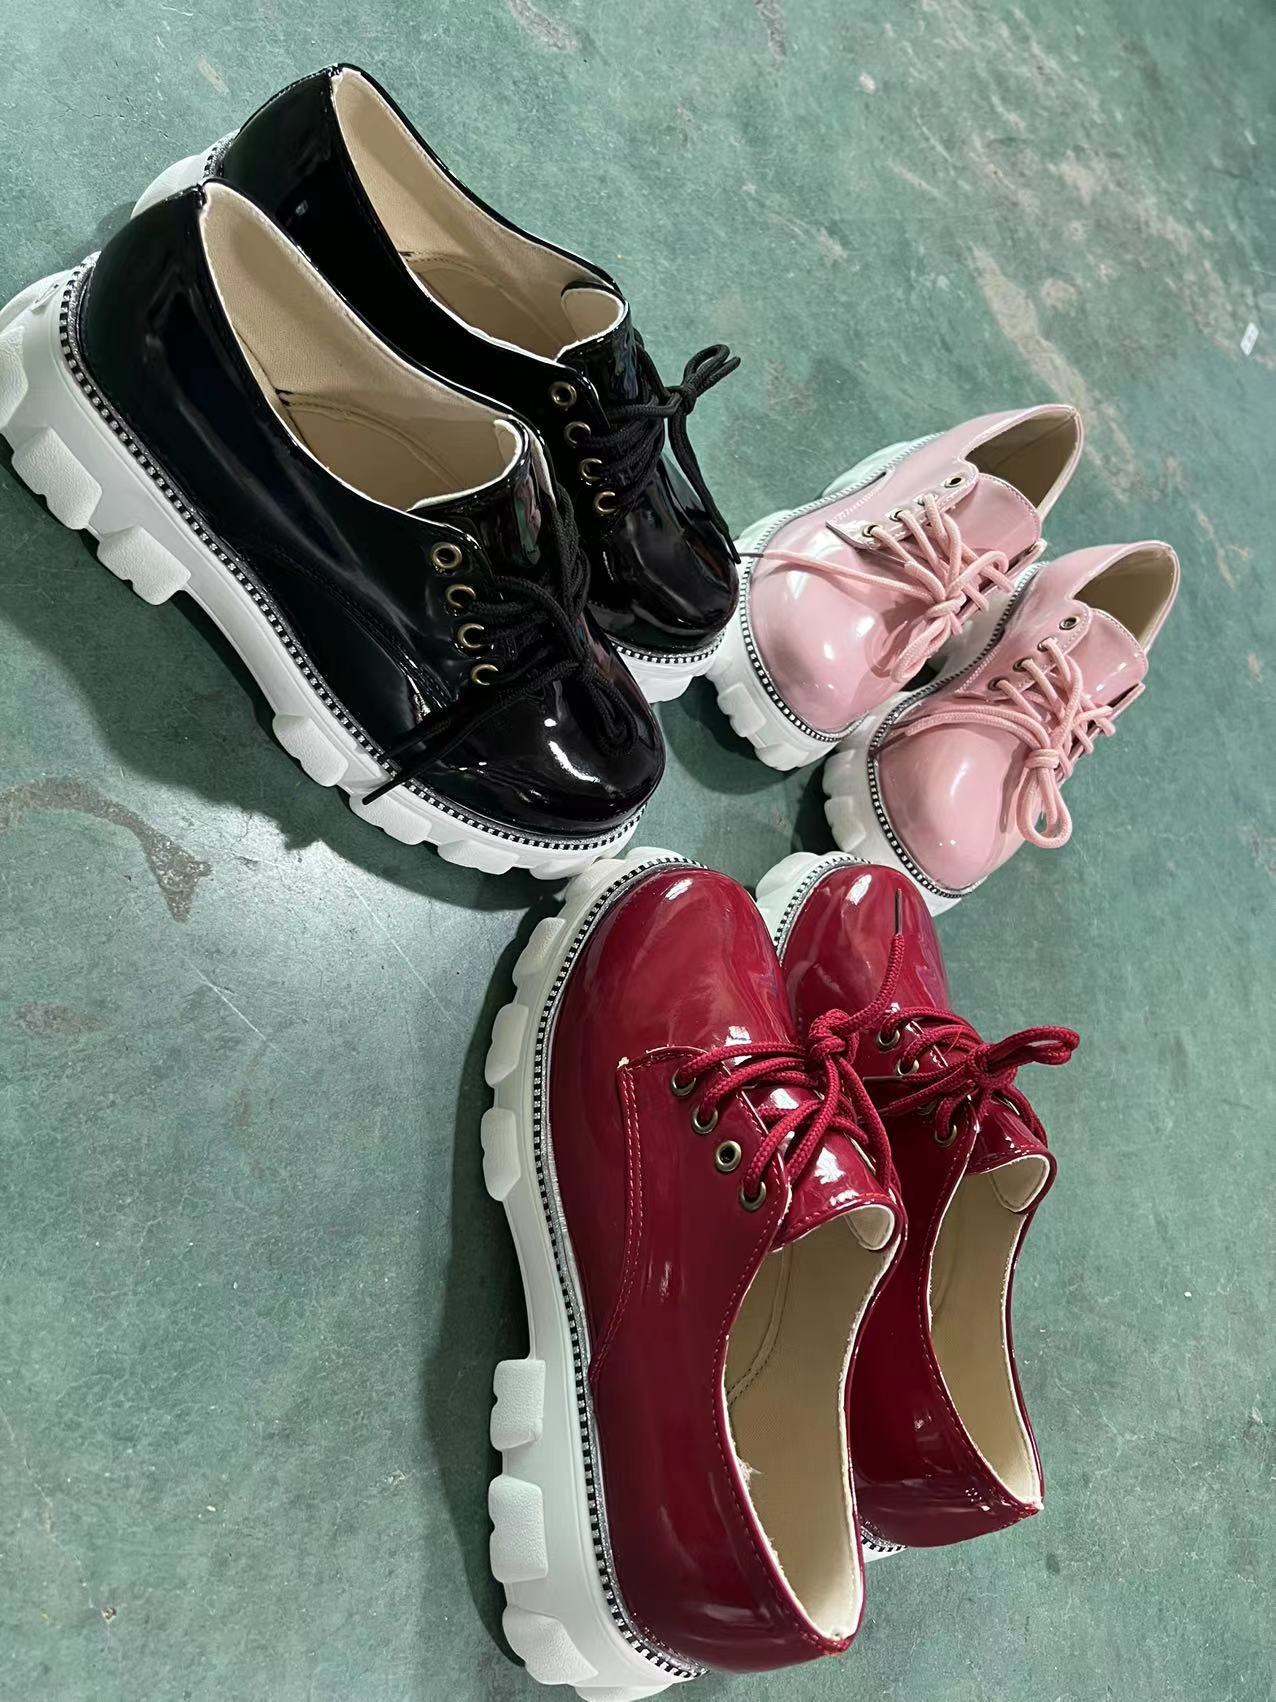 Thick Heel Increased Flat Platform Oxford Women Shoes Black/Red/Pink